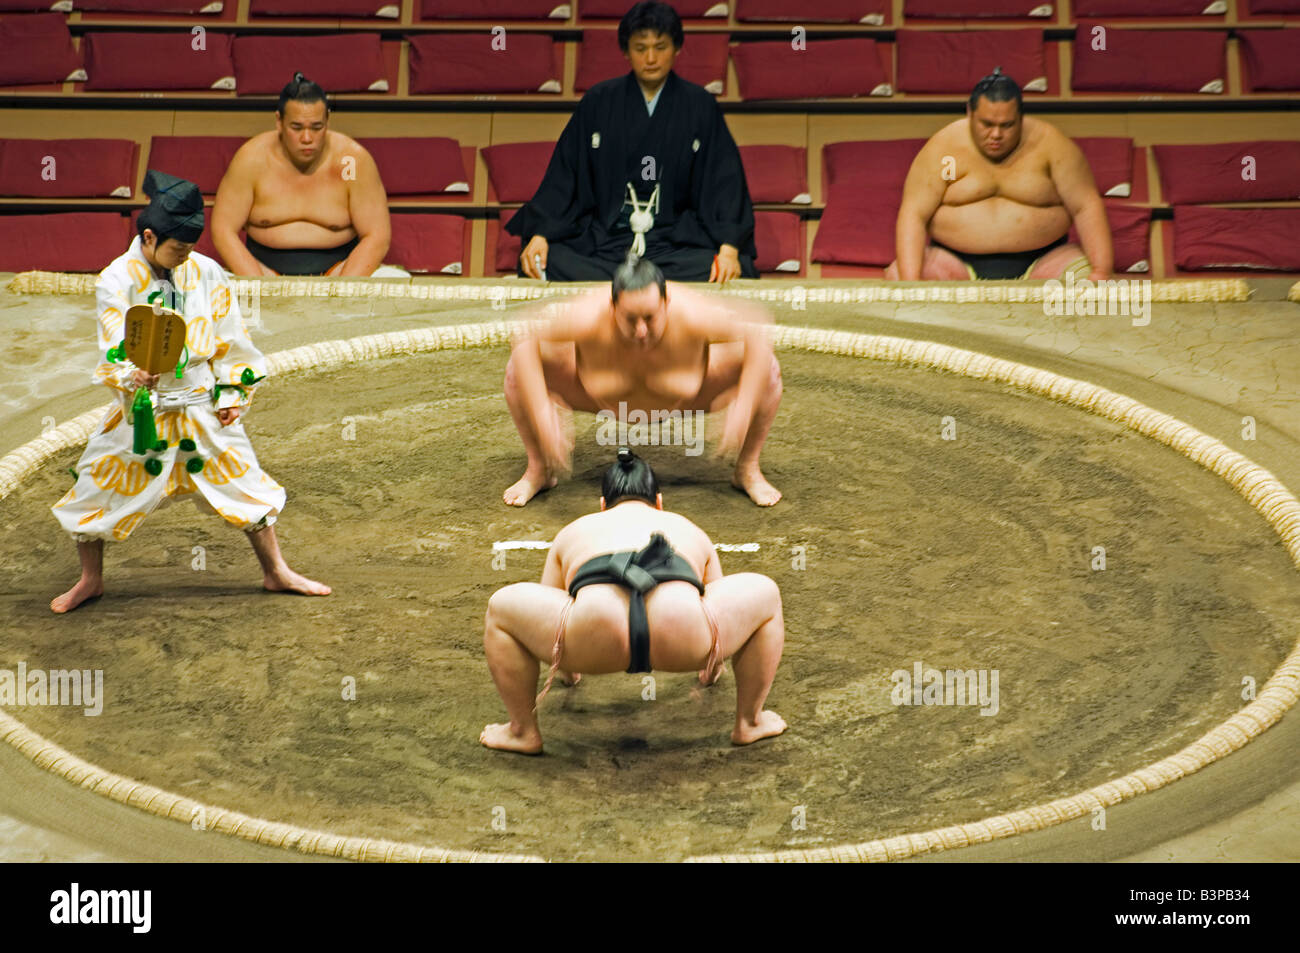 Le Japon, quartier de Ryogoku Kokugikan, stade Hall. Grand Taikai Tournoi Sumo sumo wrestlers concurrence Banque D'Images